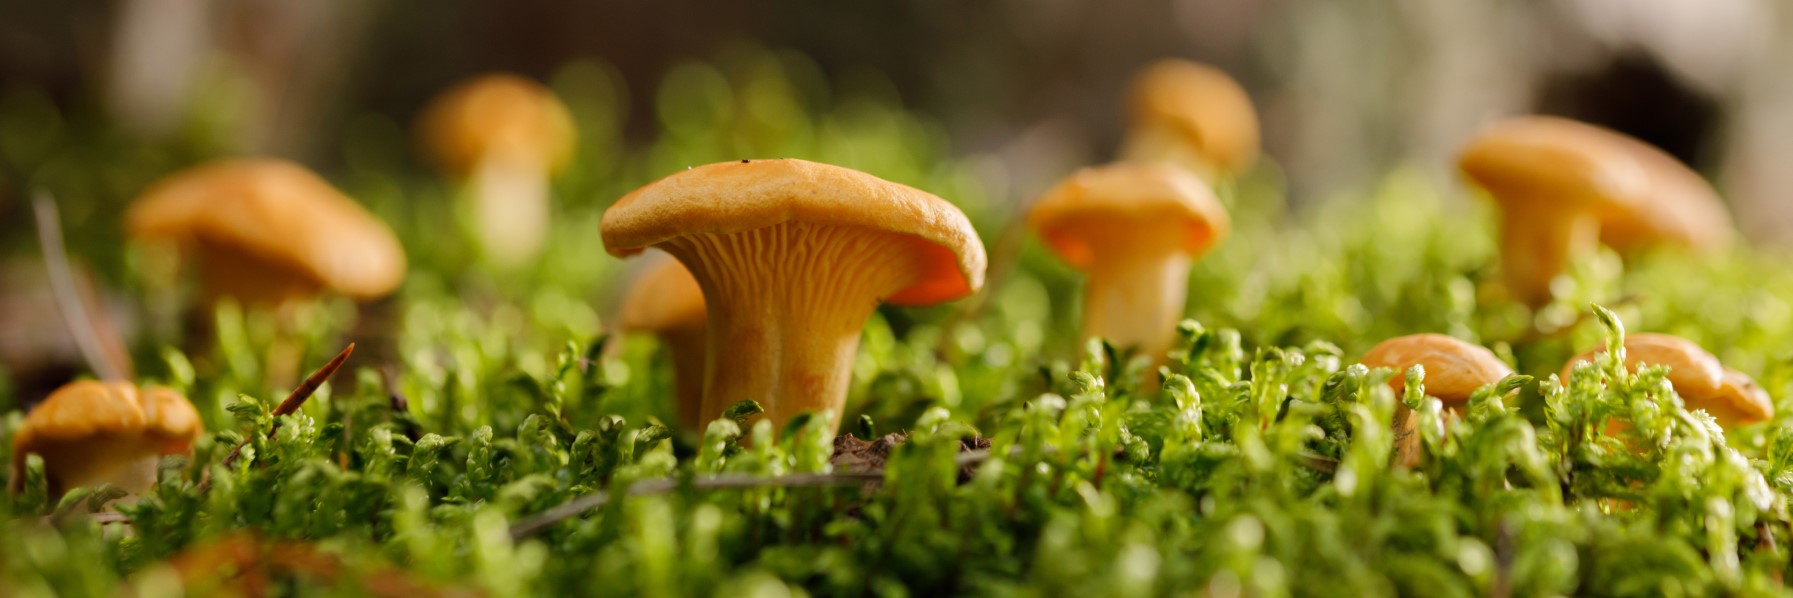 Mushroom Growing Diploma